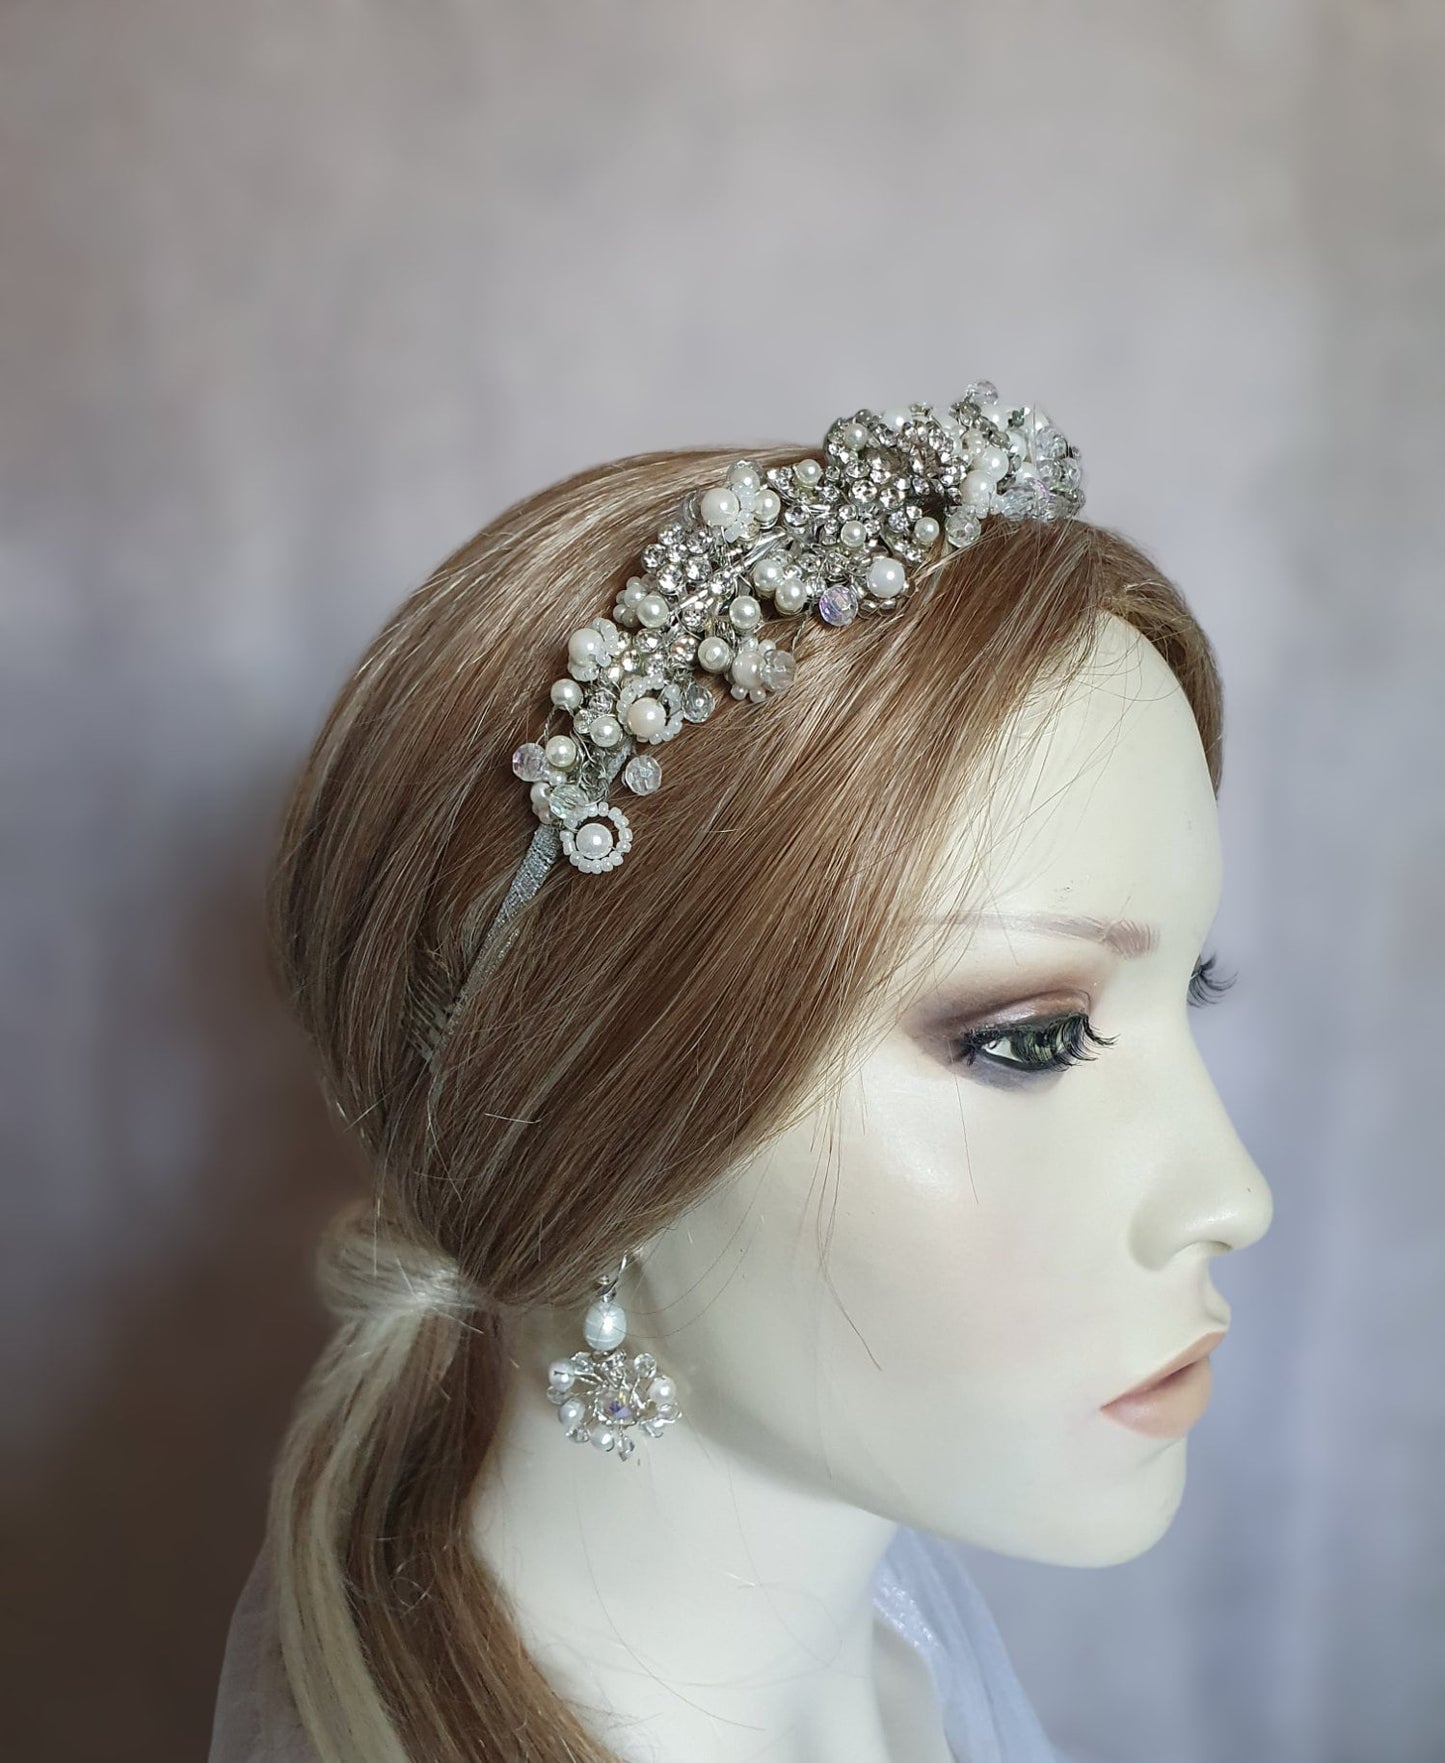 Bruiloft tiara met kristallen stenen en parels, handgemaakt, bruids tiara, bruids diaeem, bruids tiara, dames tiara, speciale gebeurtenis